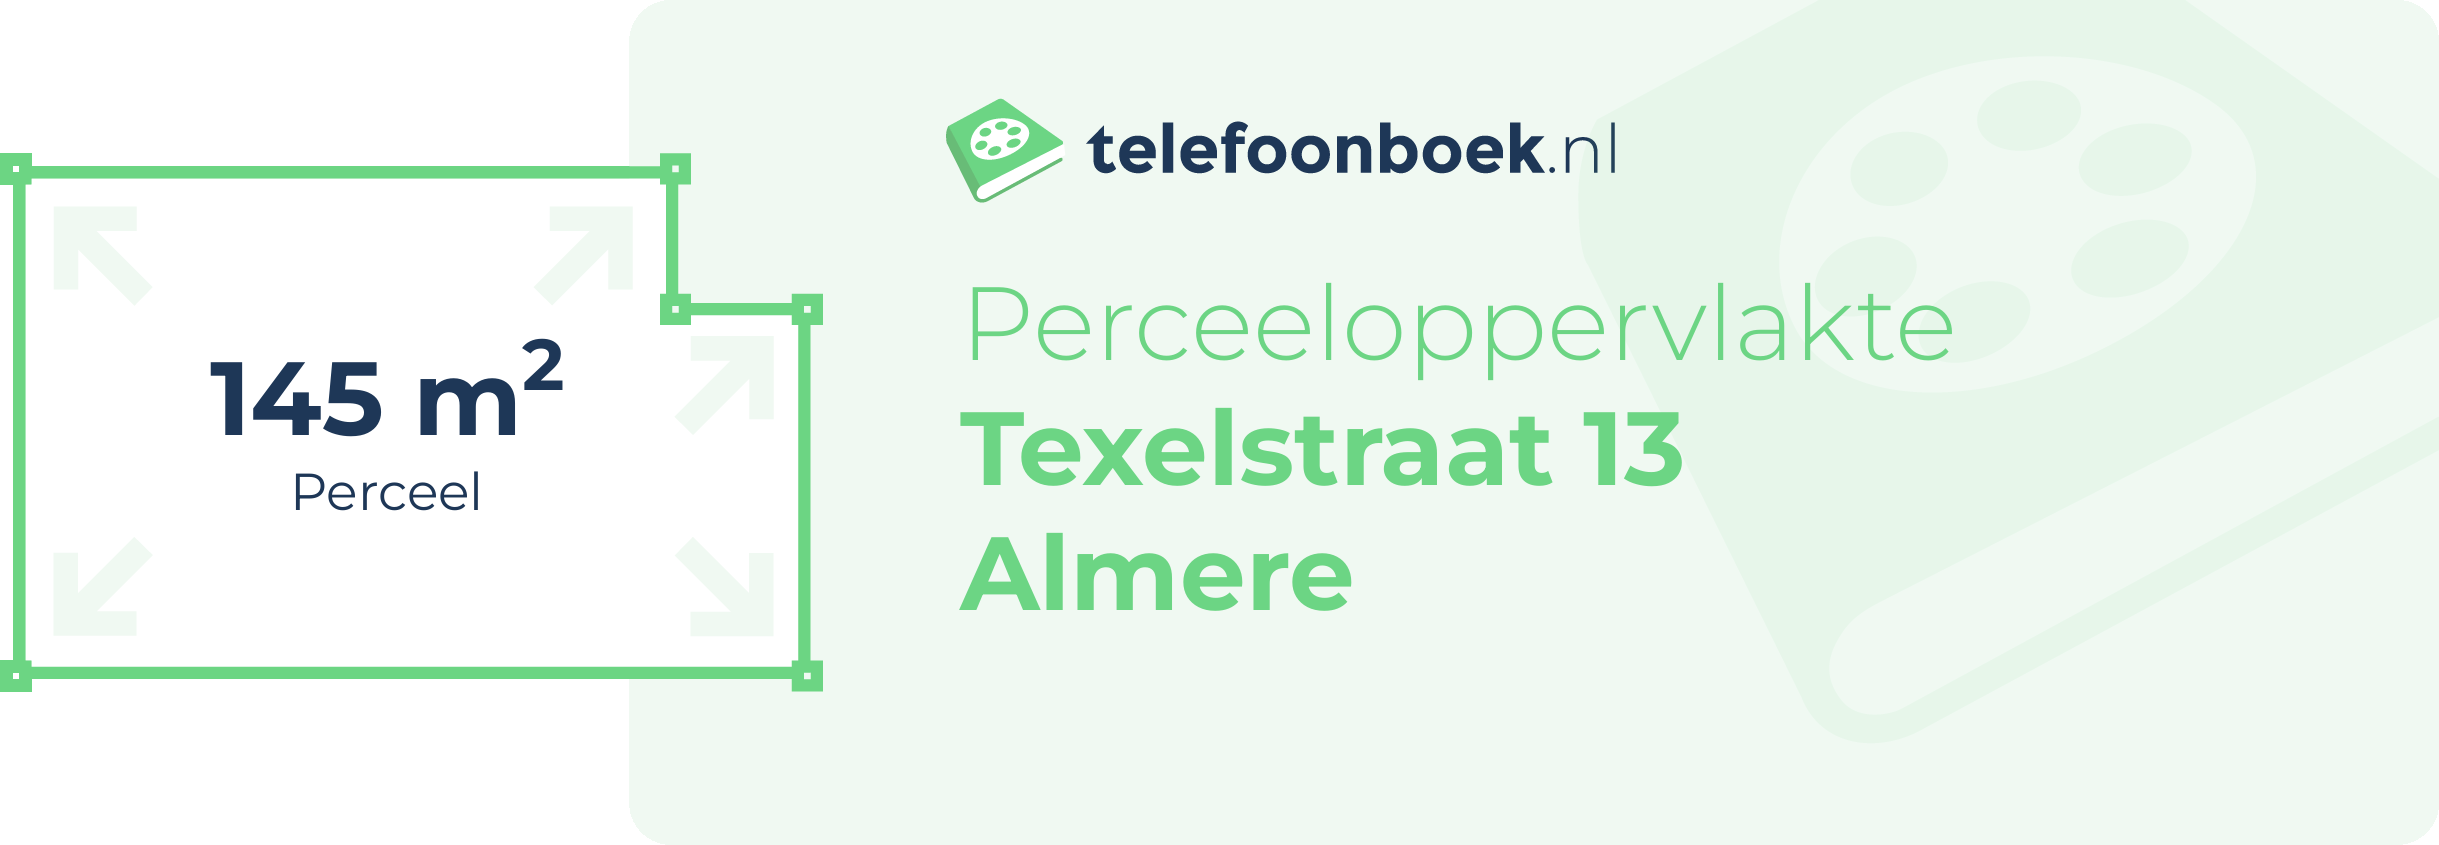 Perceeloppervlakte Texelstraat 13 Almere